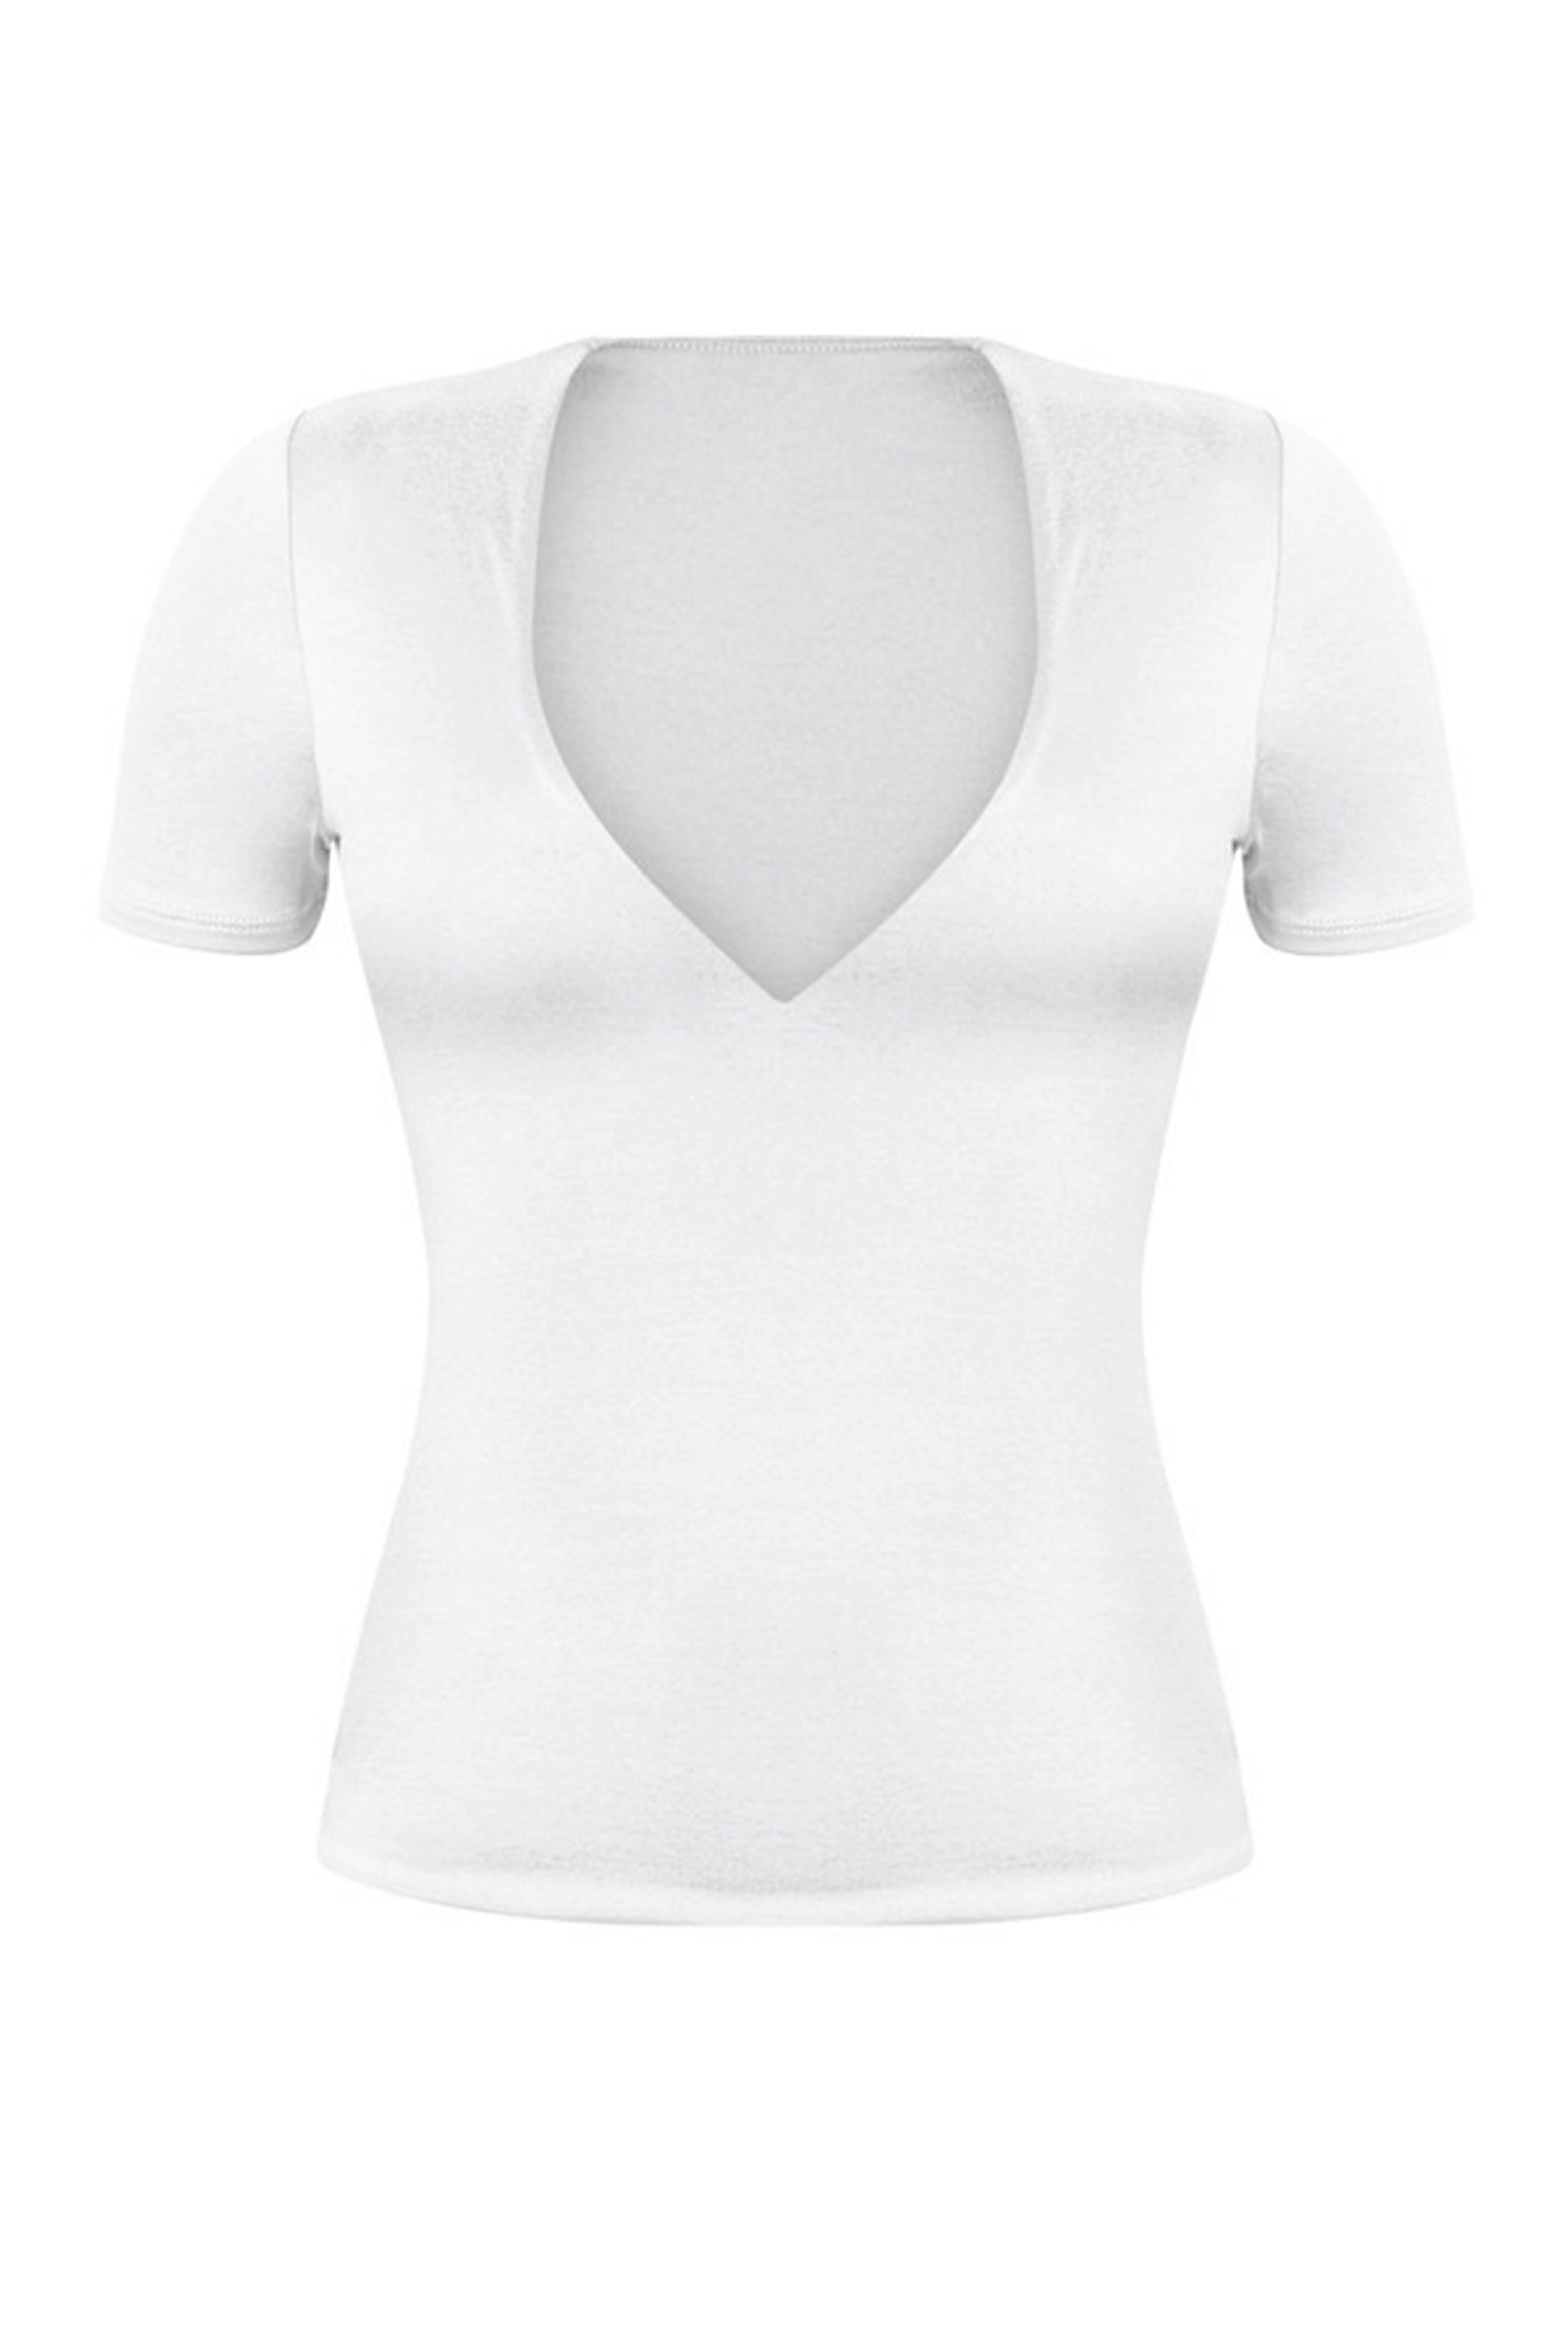 White Short Sleeve V-Neck Solid Top